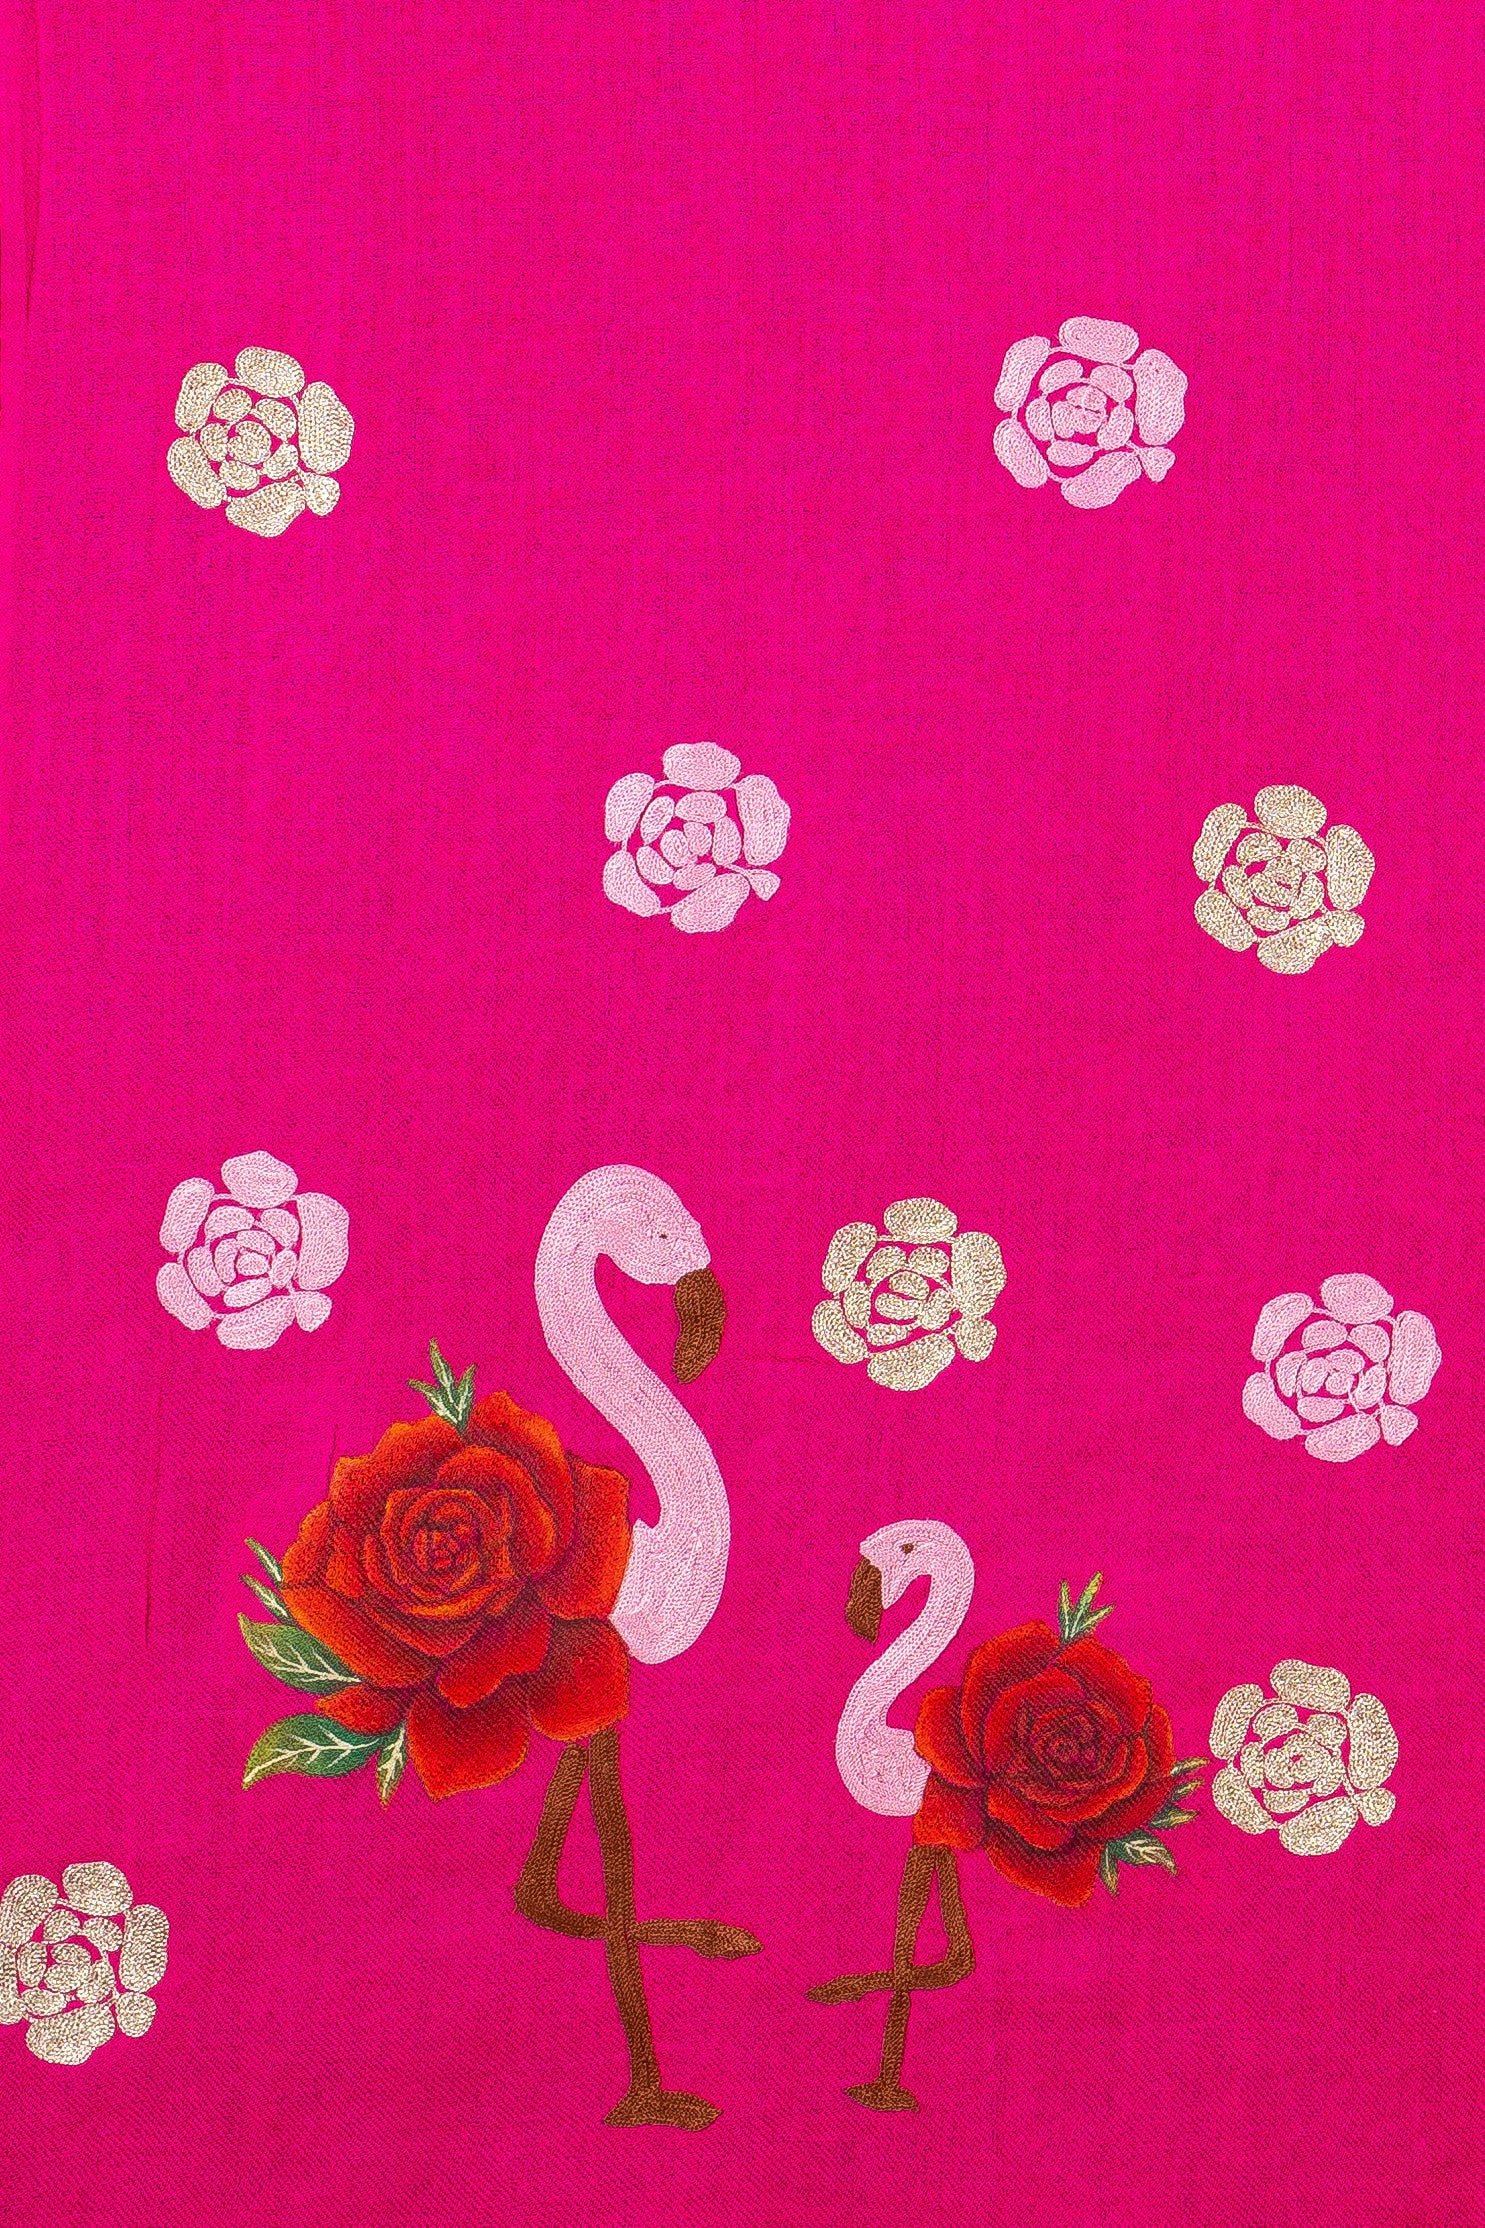 Flamingo & Roses in Pashmina